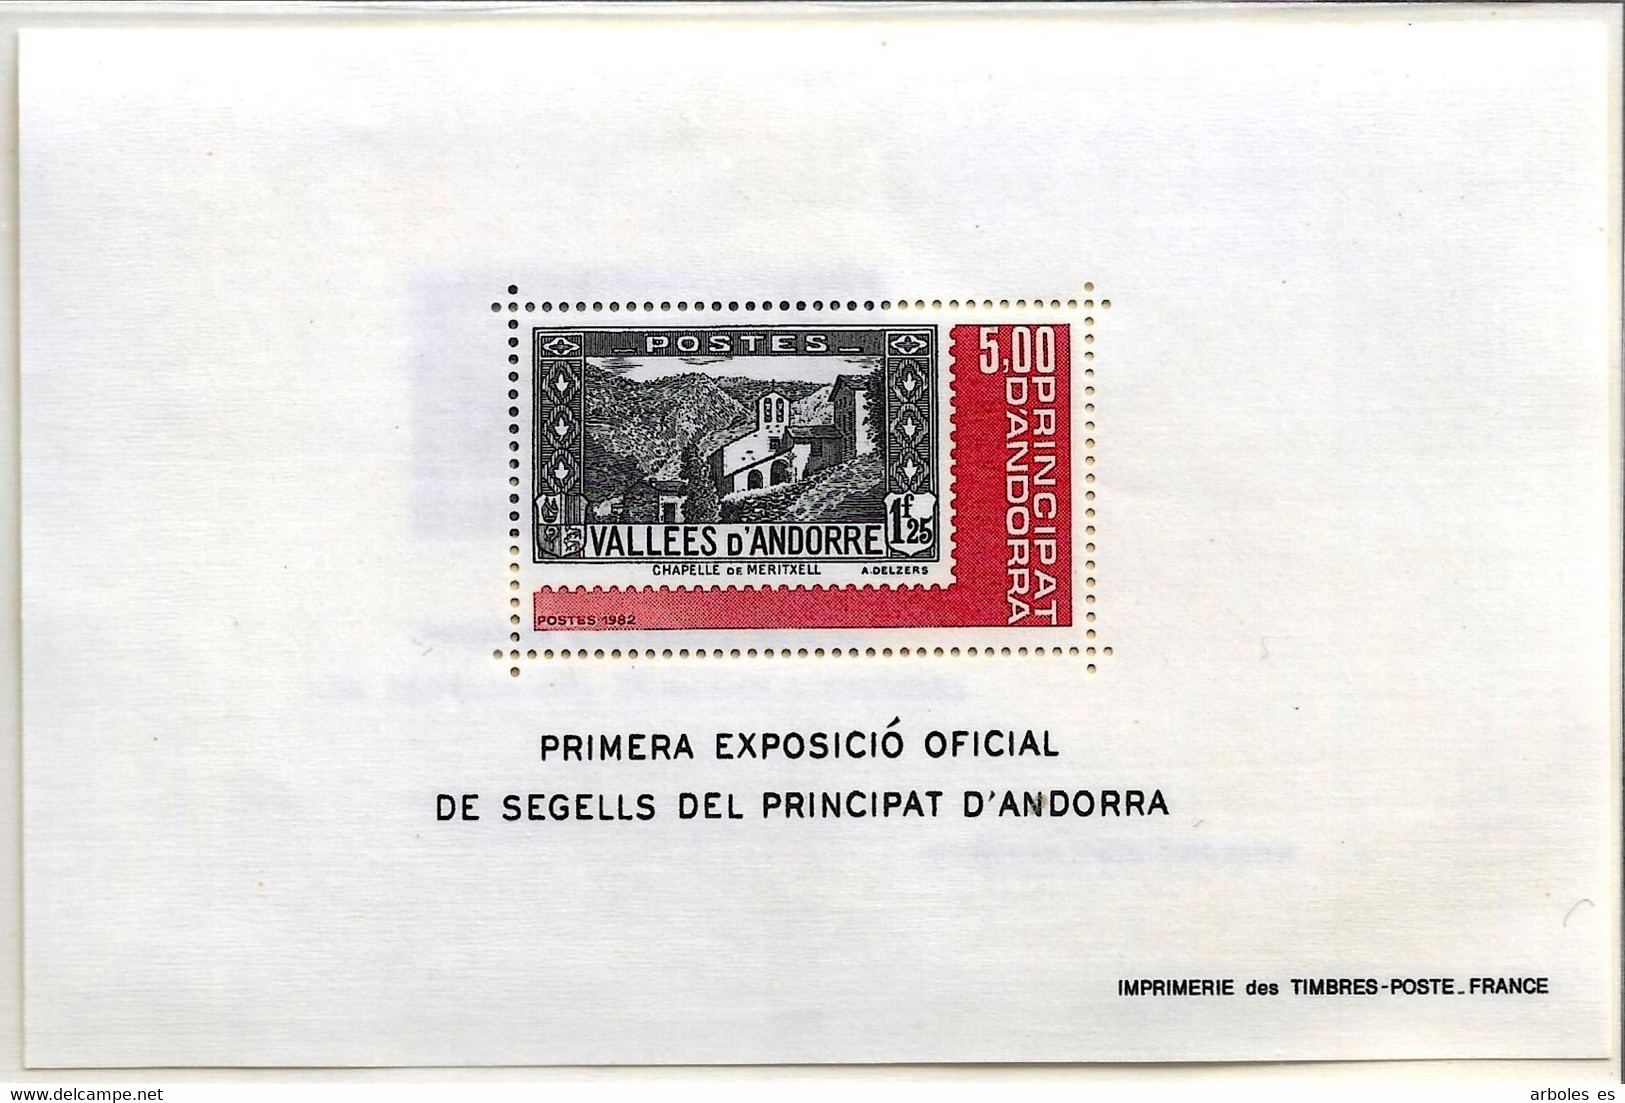 ANDORRA FRANCESA - EXPOSICION FALATELICA - AÑO 1982 - Nº CATALOGO YVERT 0001 - NUEVOS - Hojas Bloque